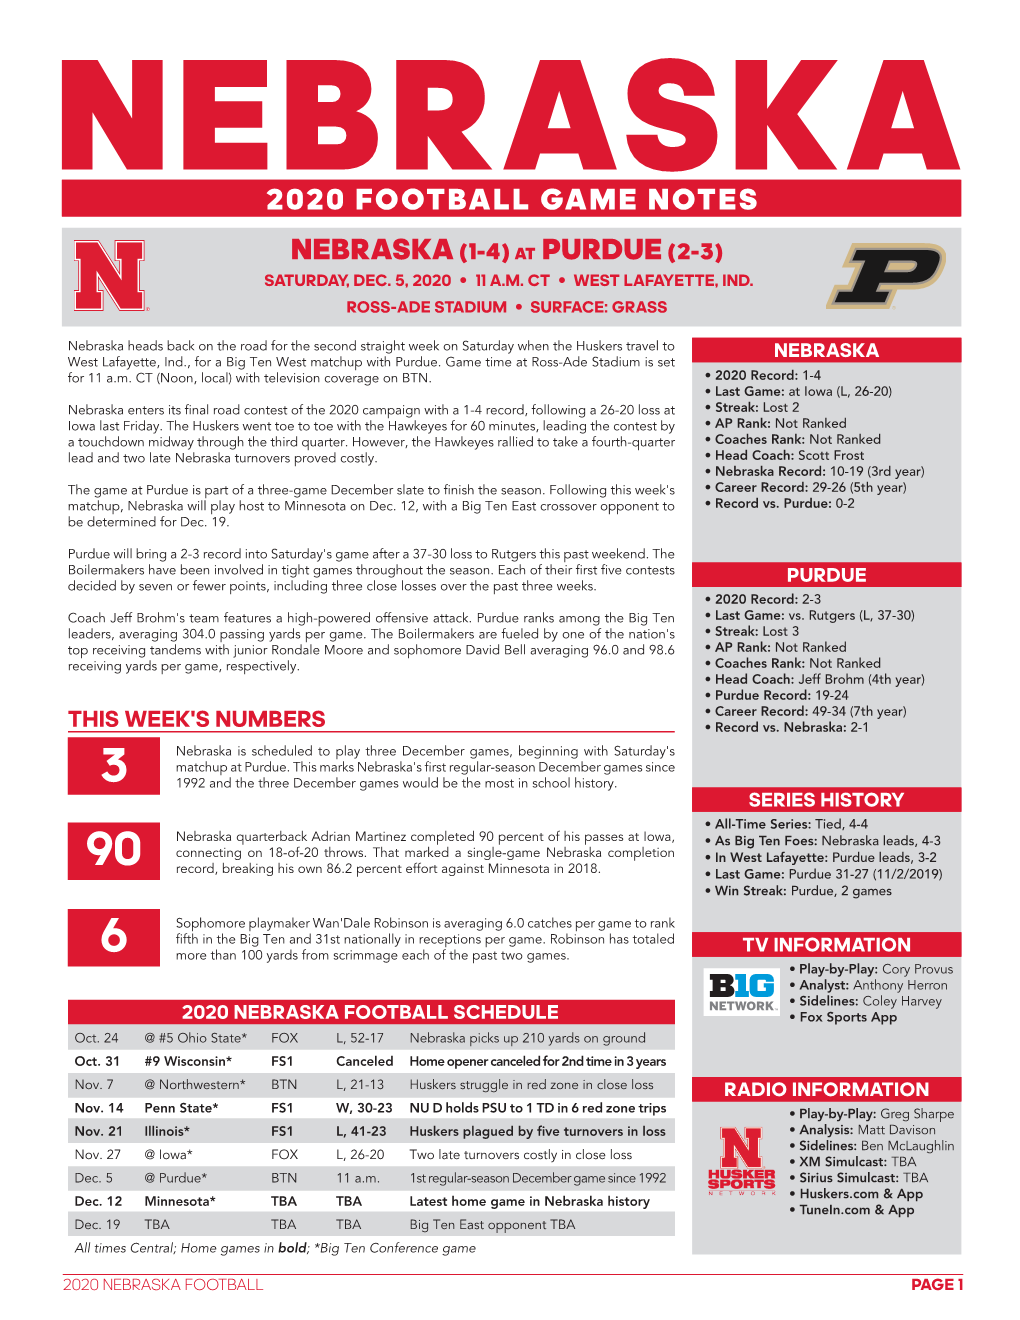 Nebraska (1-4) at Purdue (2-3) 2020 Football Game Notes